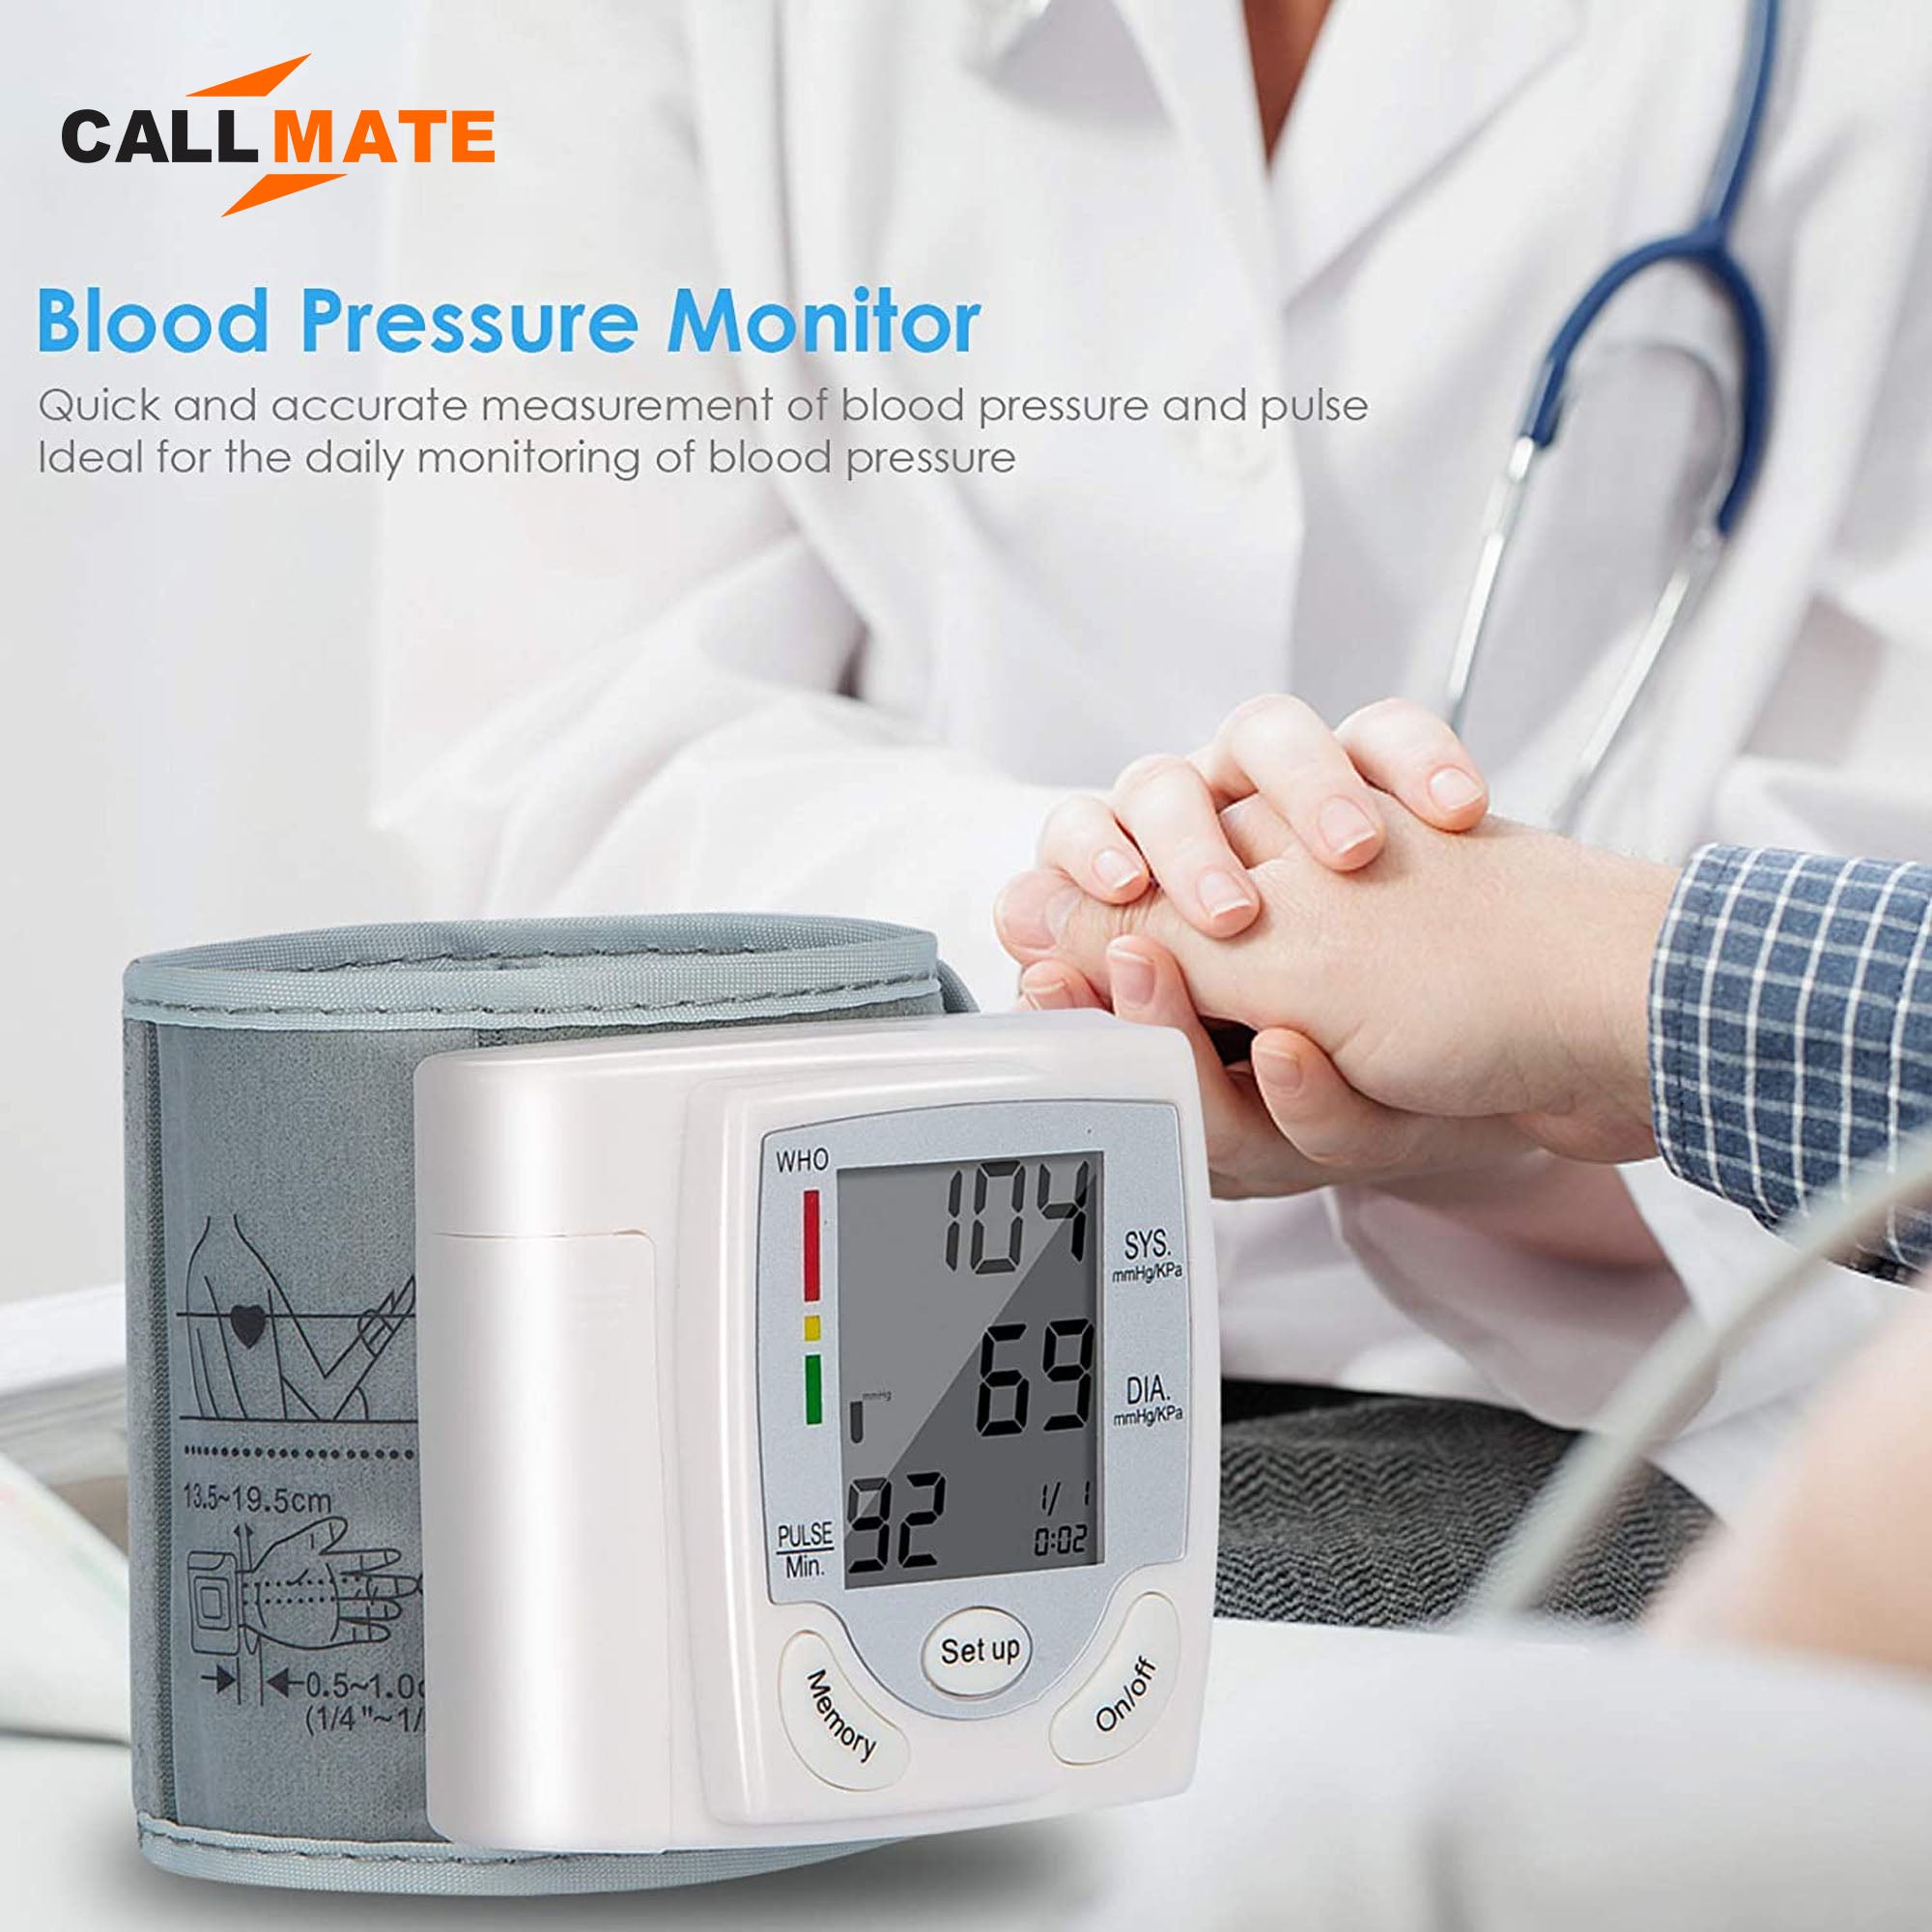 Polaris: The Blood Pressure Monitor